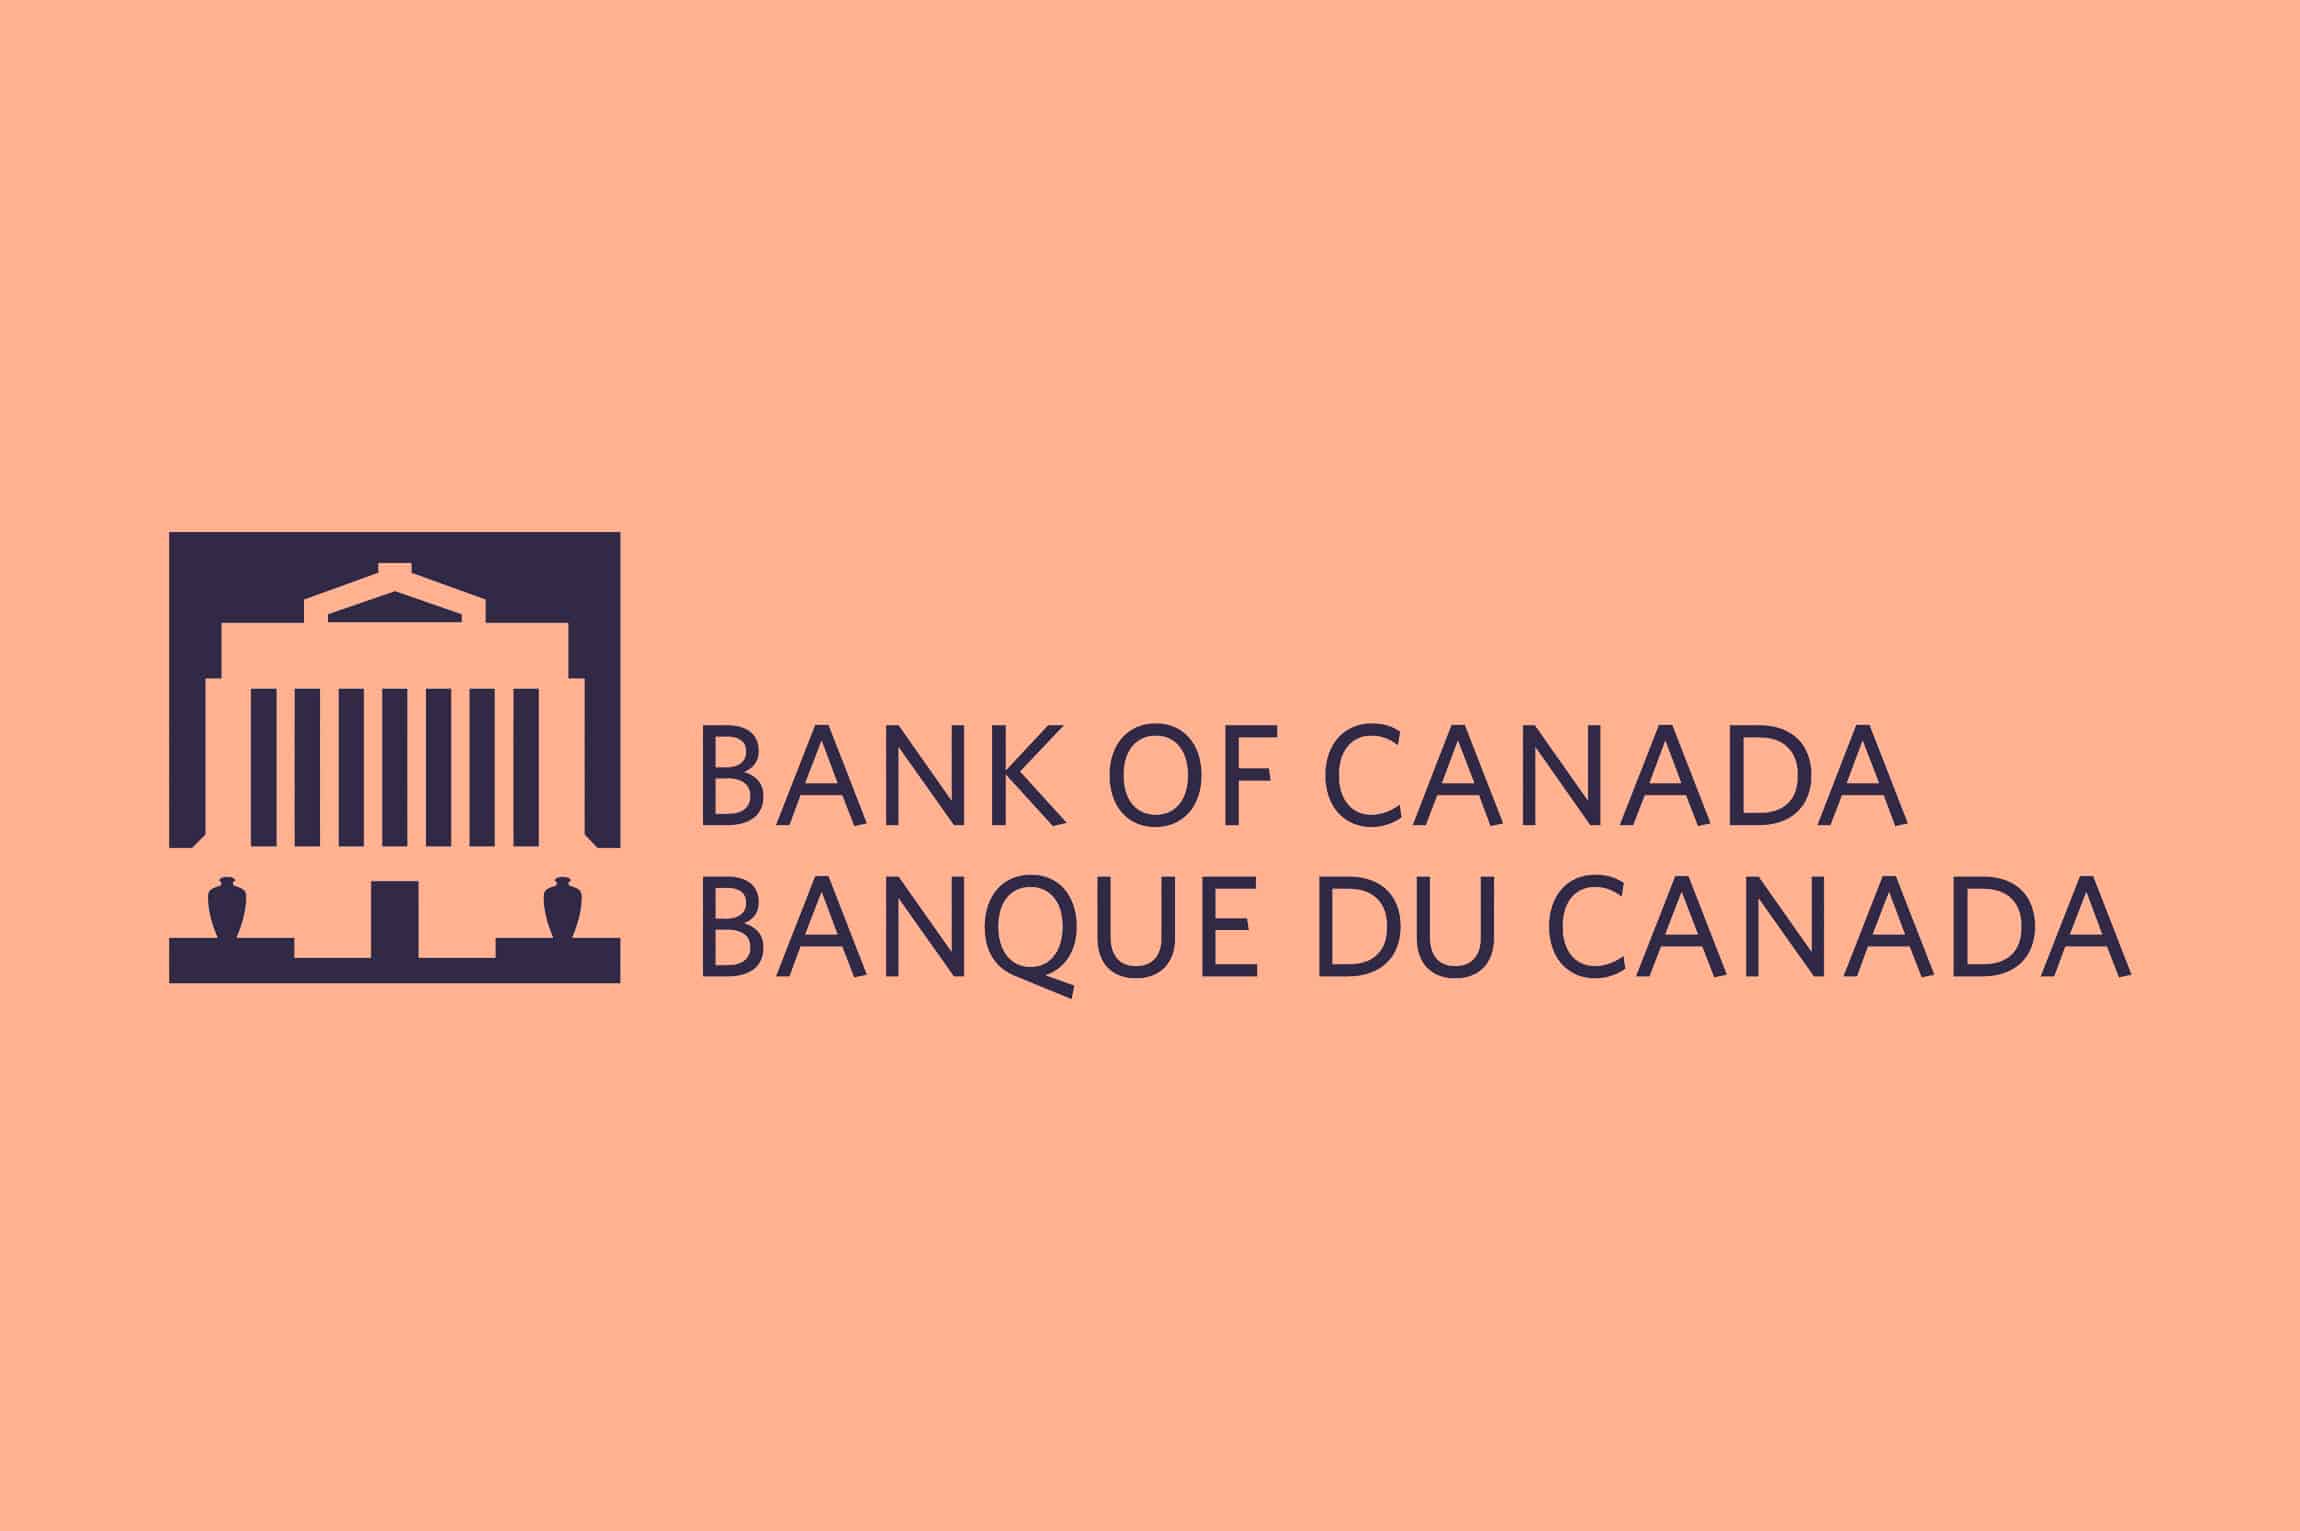 BANK OF CANADA peach